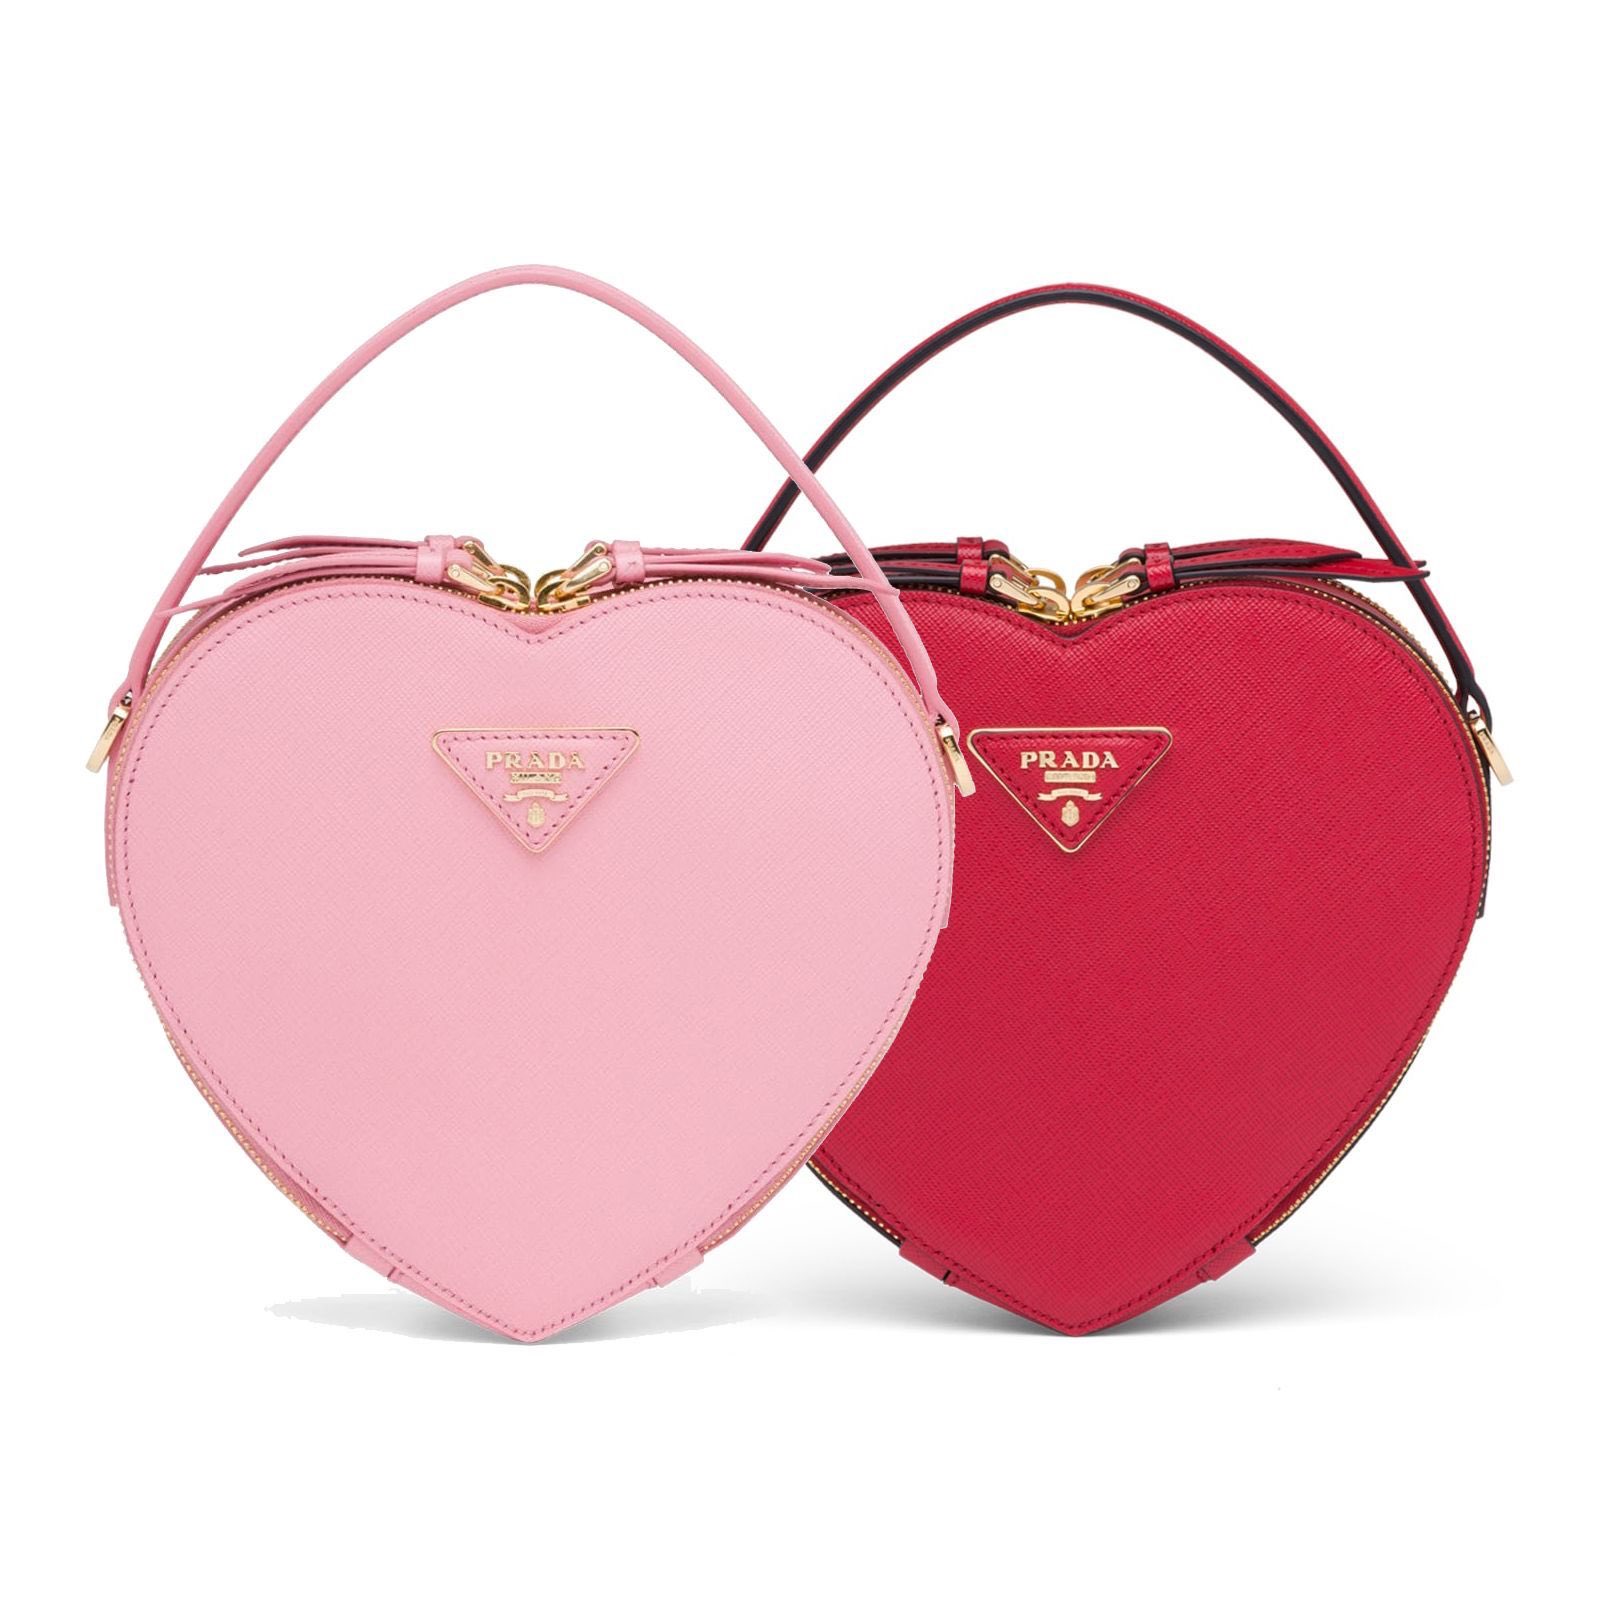 𓃭 on X: Prada heart-shaped bags  / X